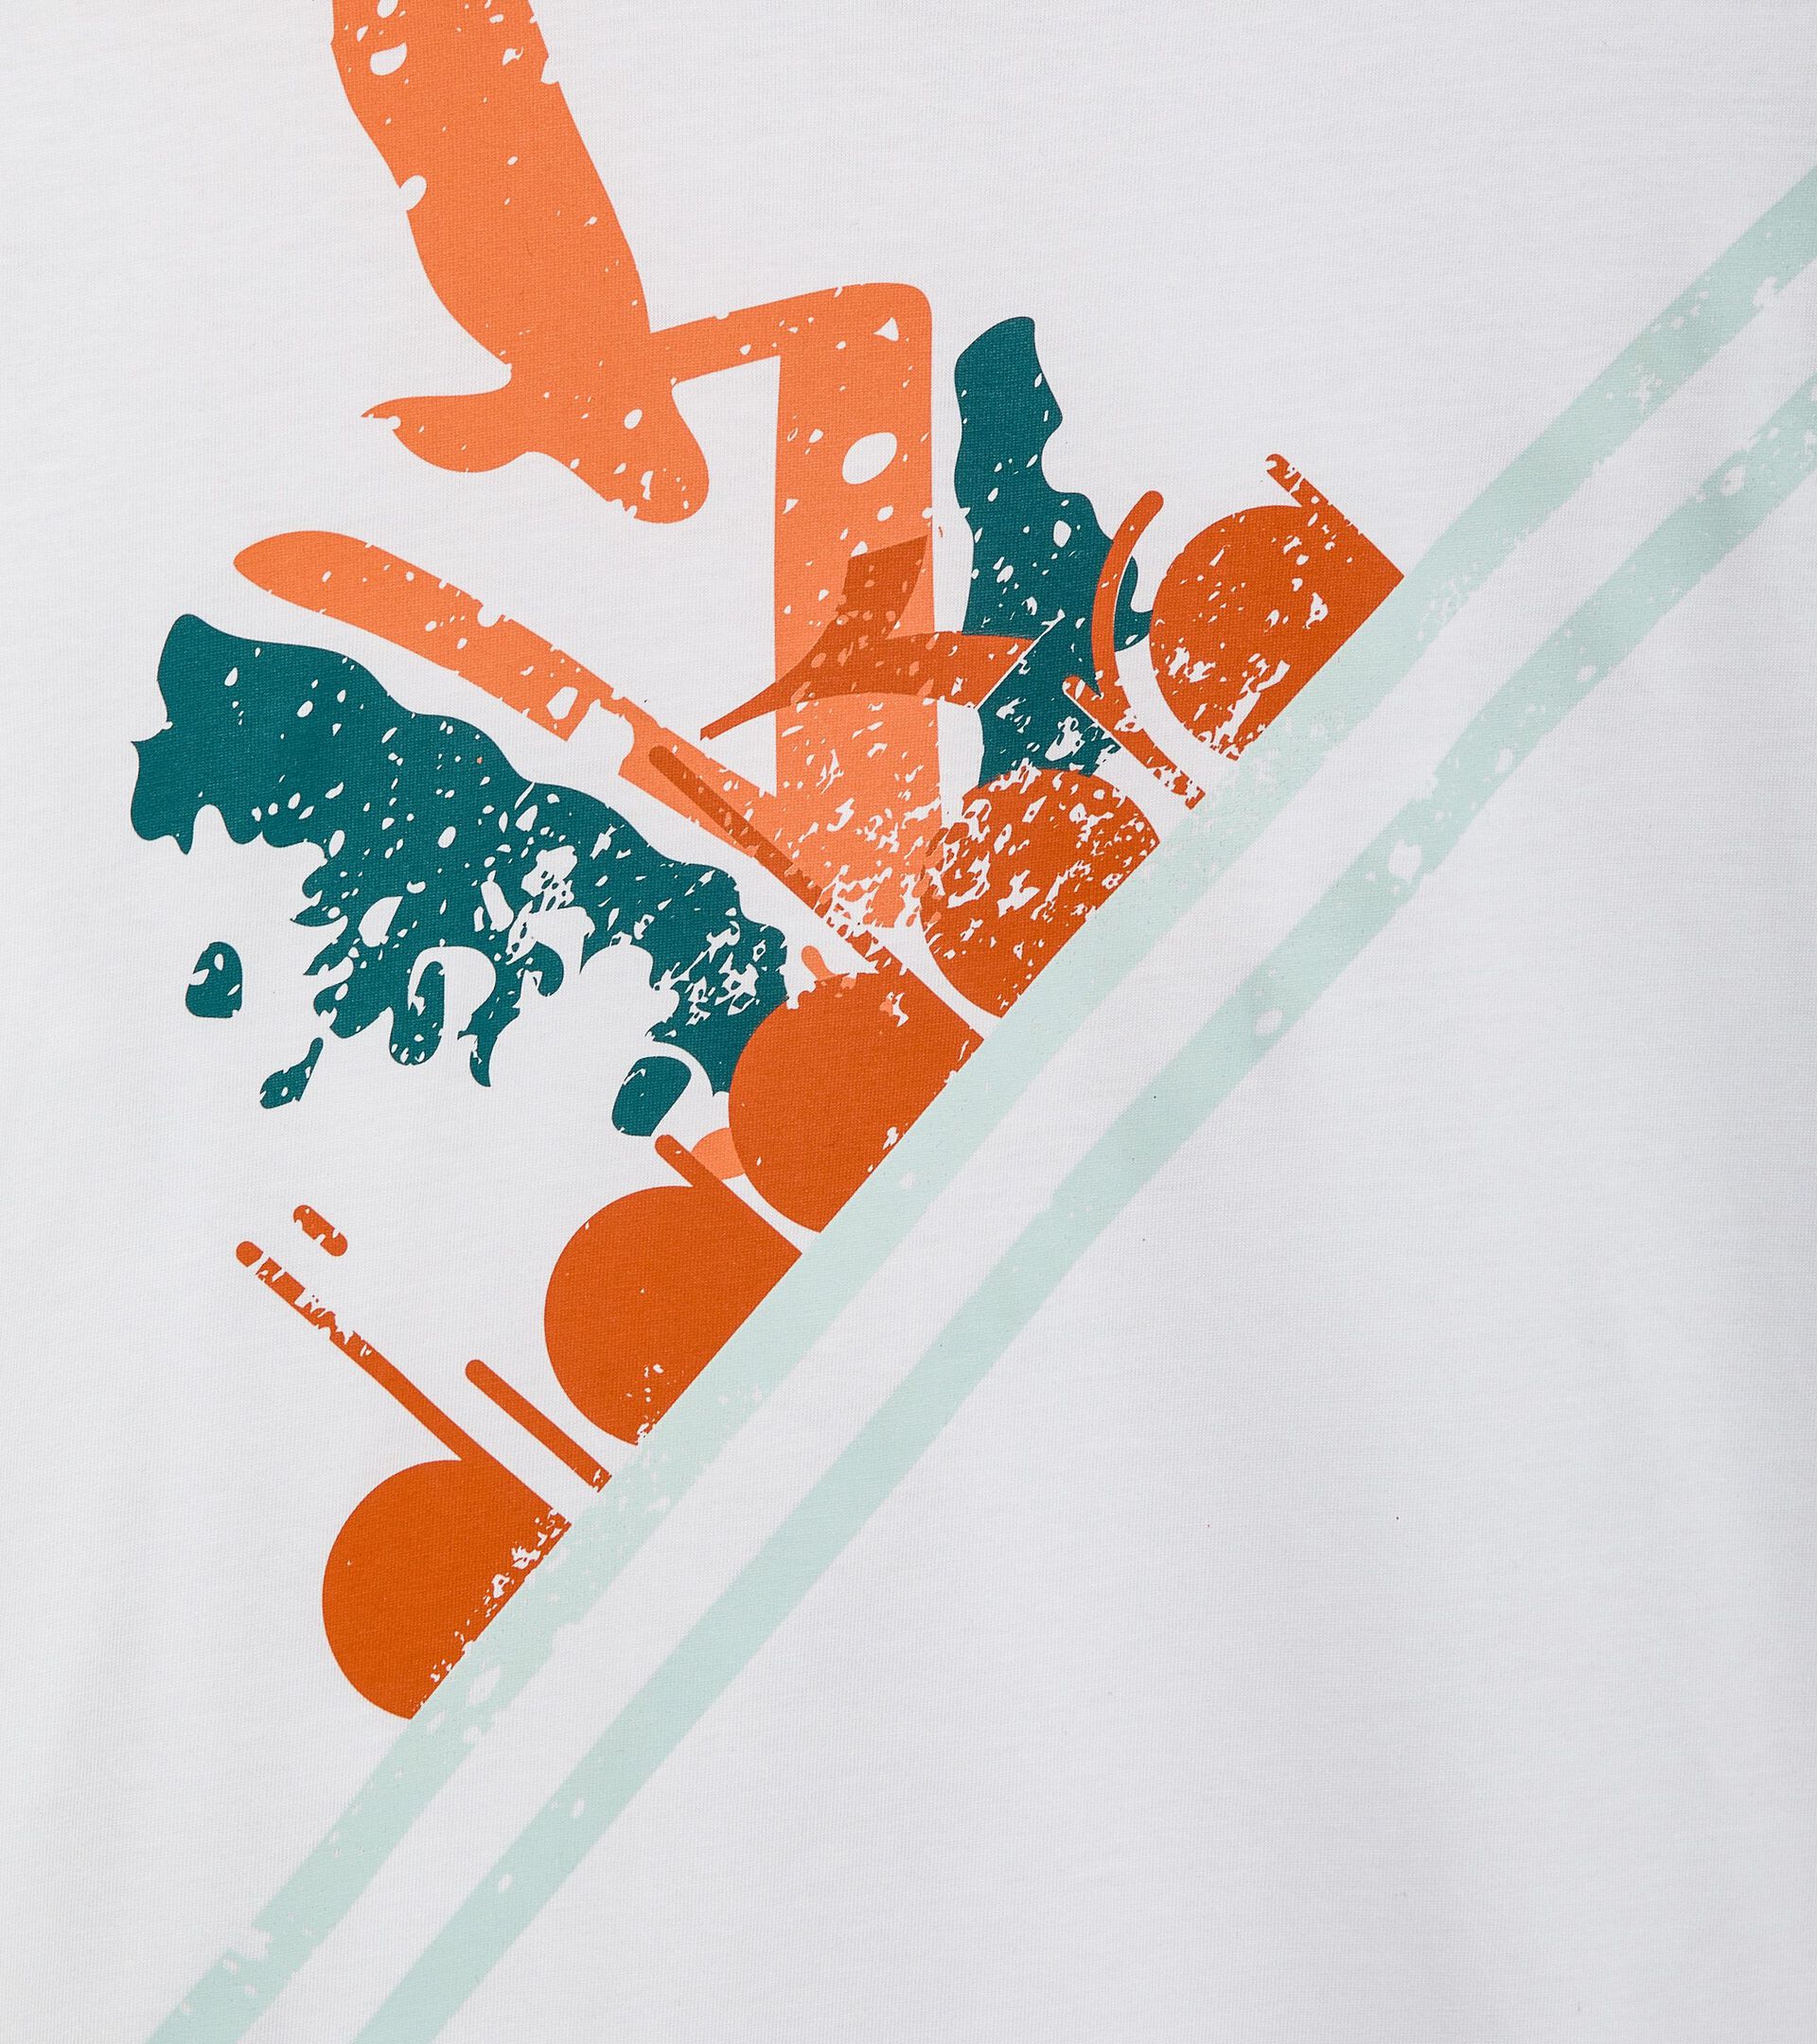 T-shirt de sport style années 90 - Made in Italy - Homme T-SHIRT SS TENNIS 90 ORANGE CAROTTE - Diadora